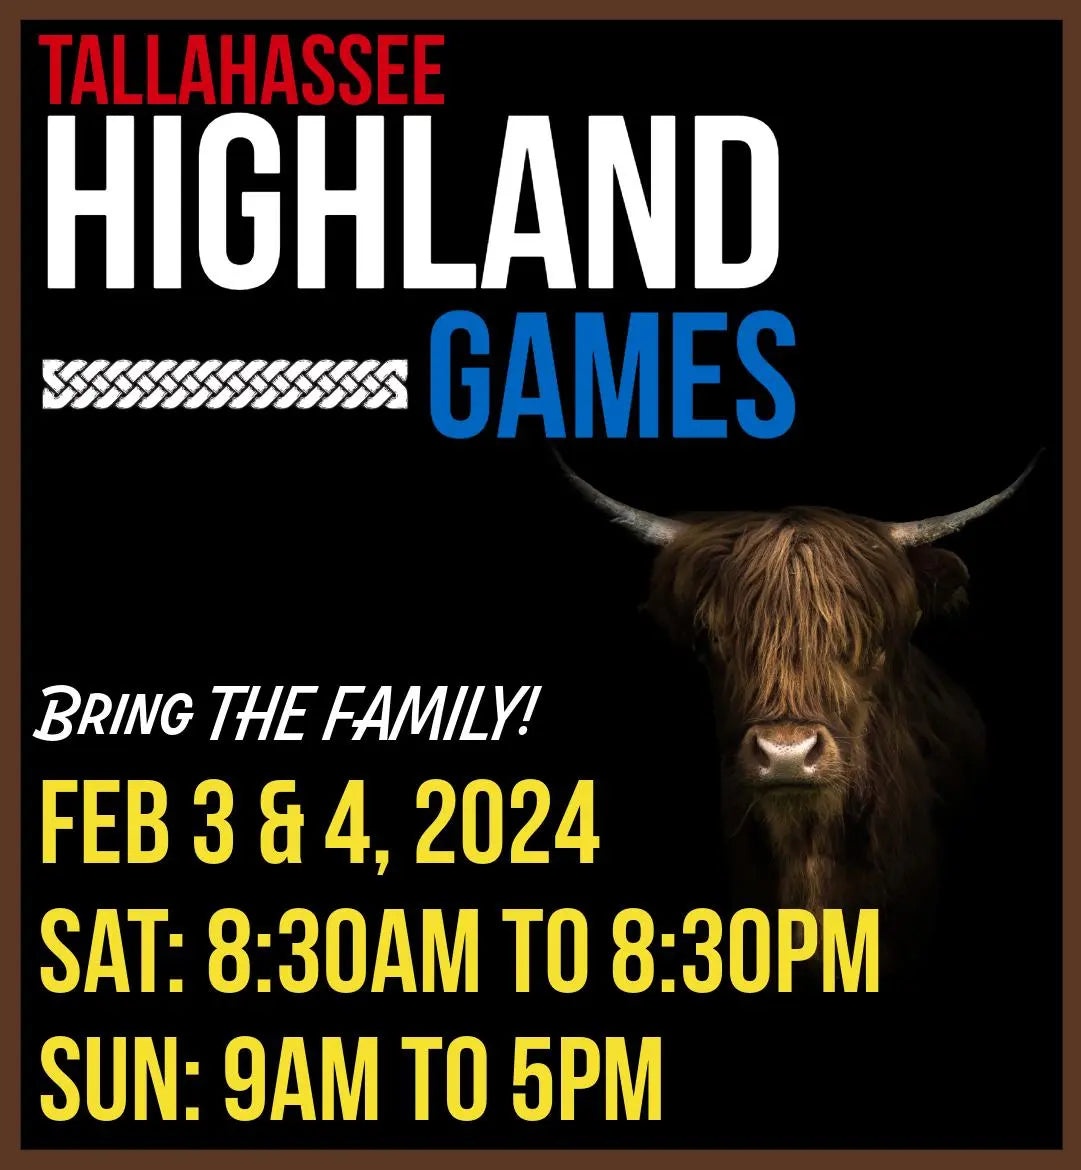 Highland Cattle Exhibit - Highland Games